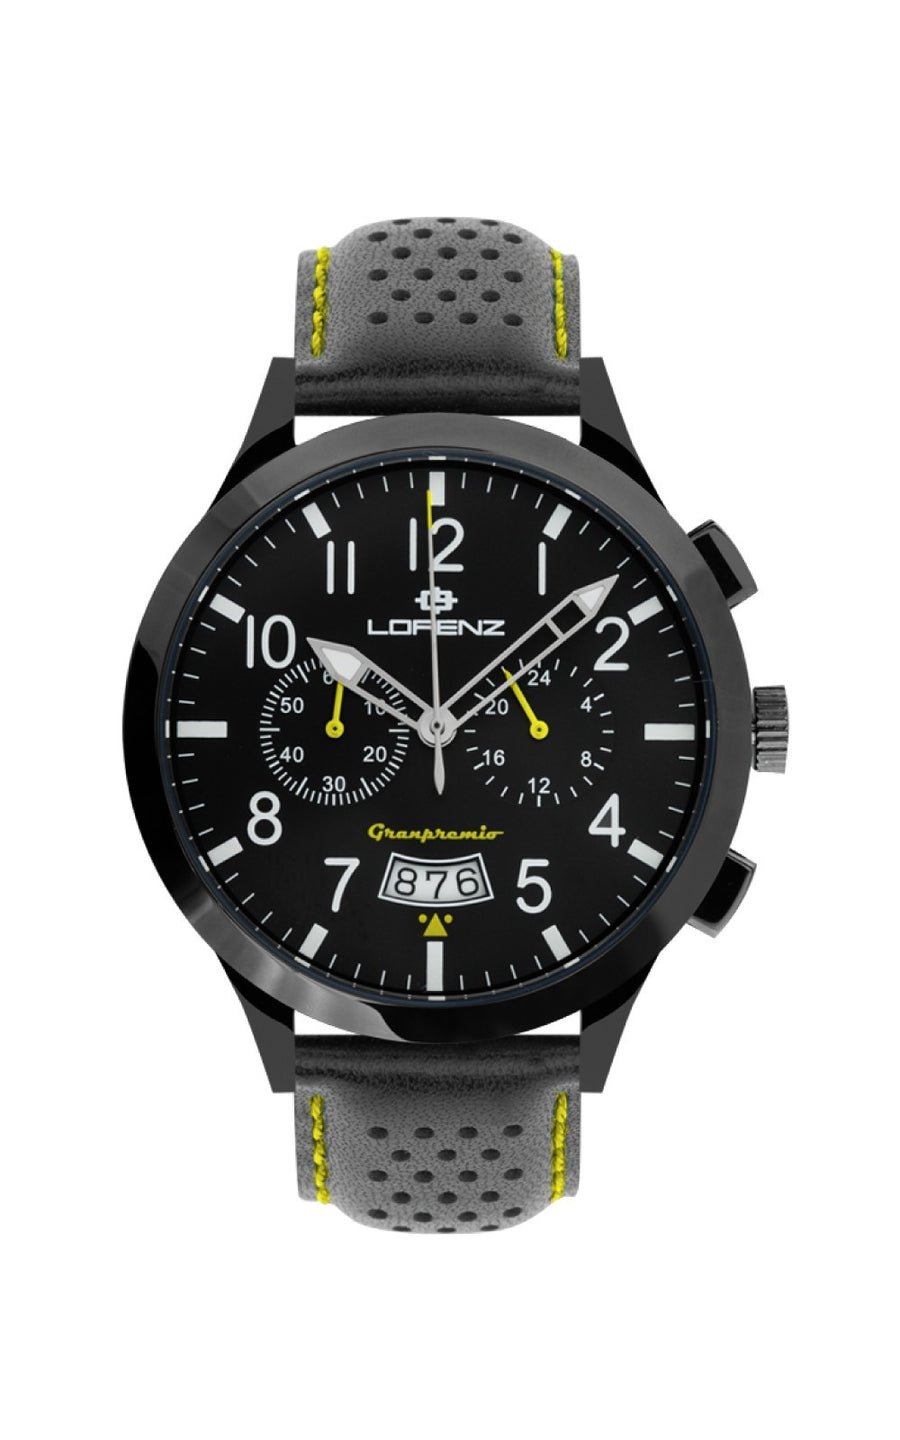 Chronograph Granpremio men's watch - Lorenz Watch